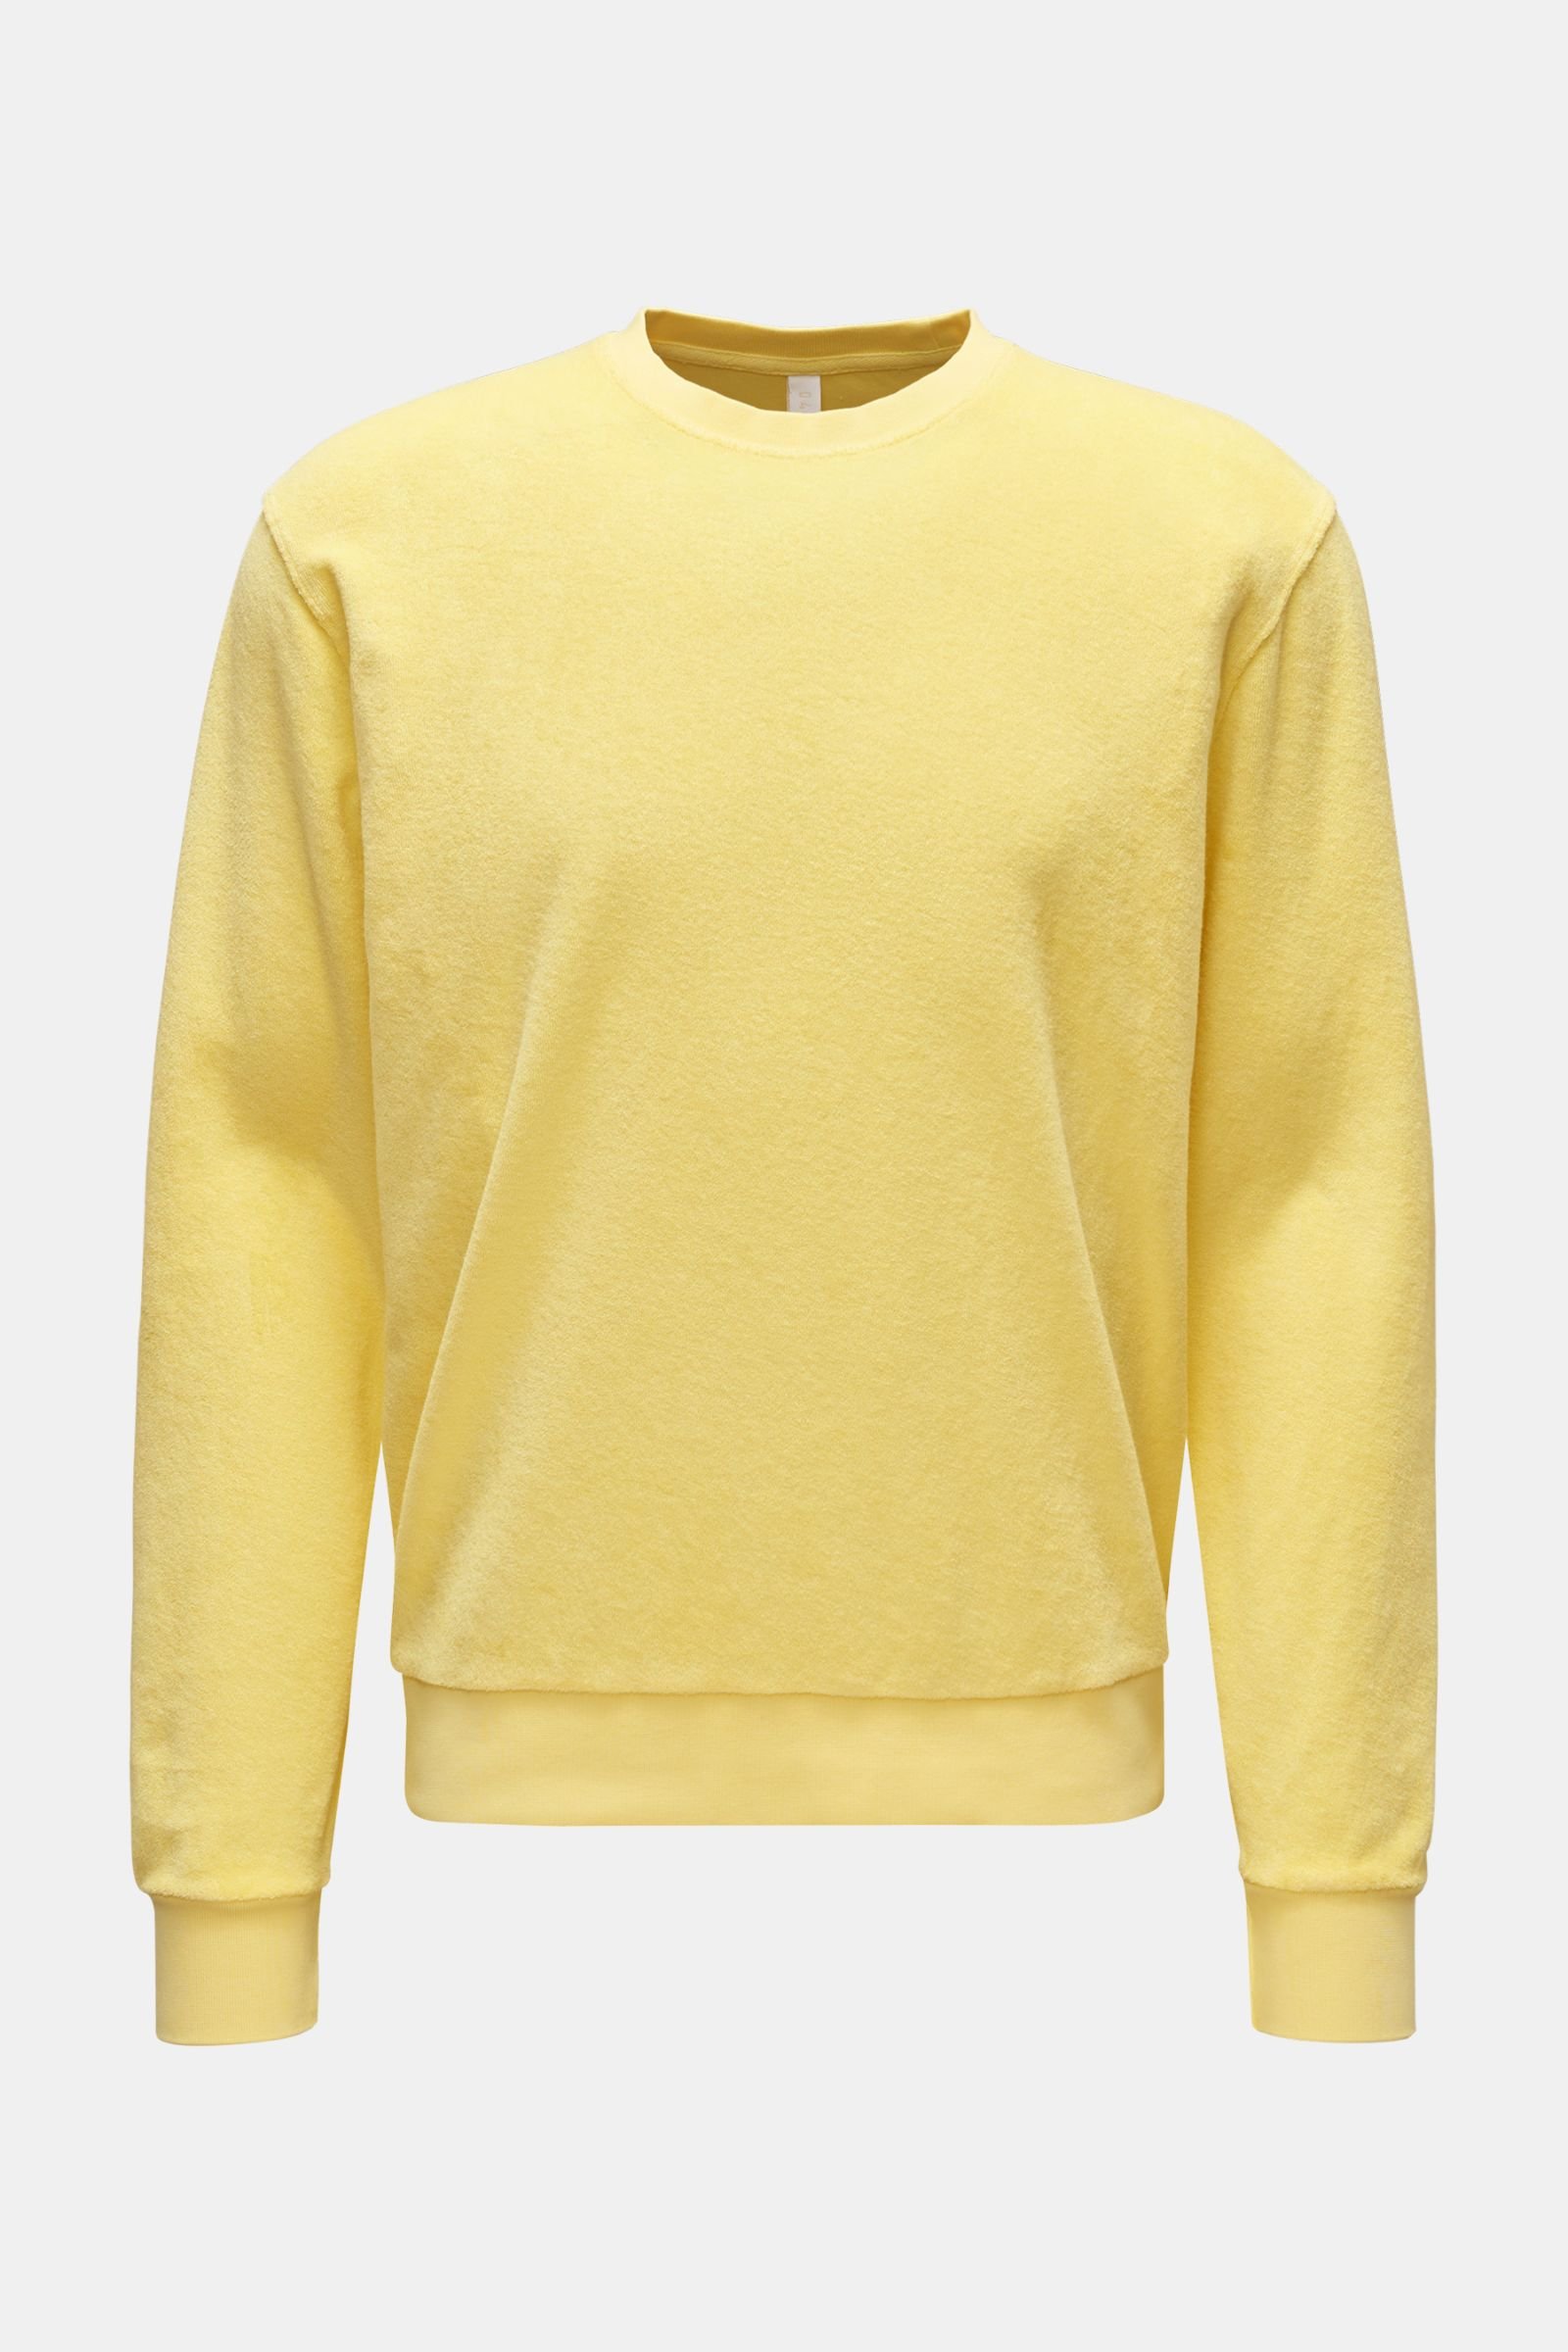 Crew neck terry sweatshirt yellow